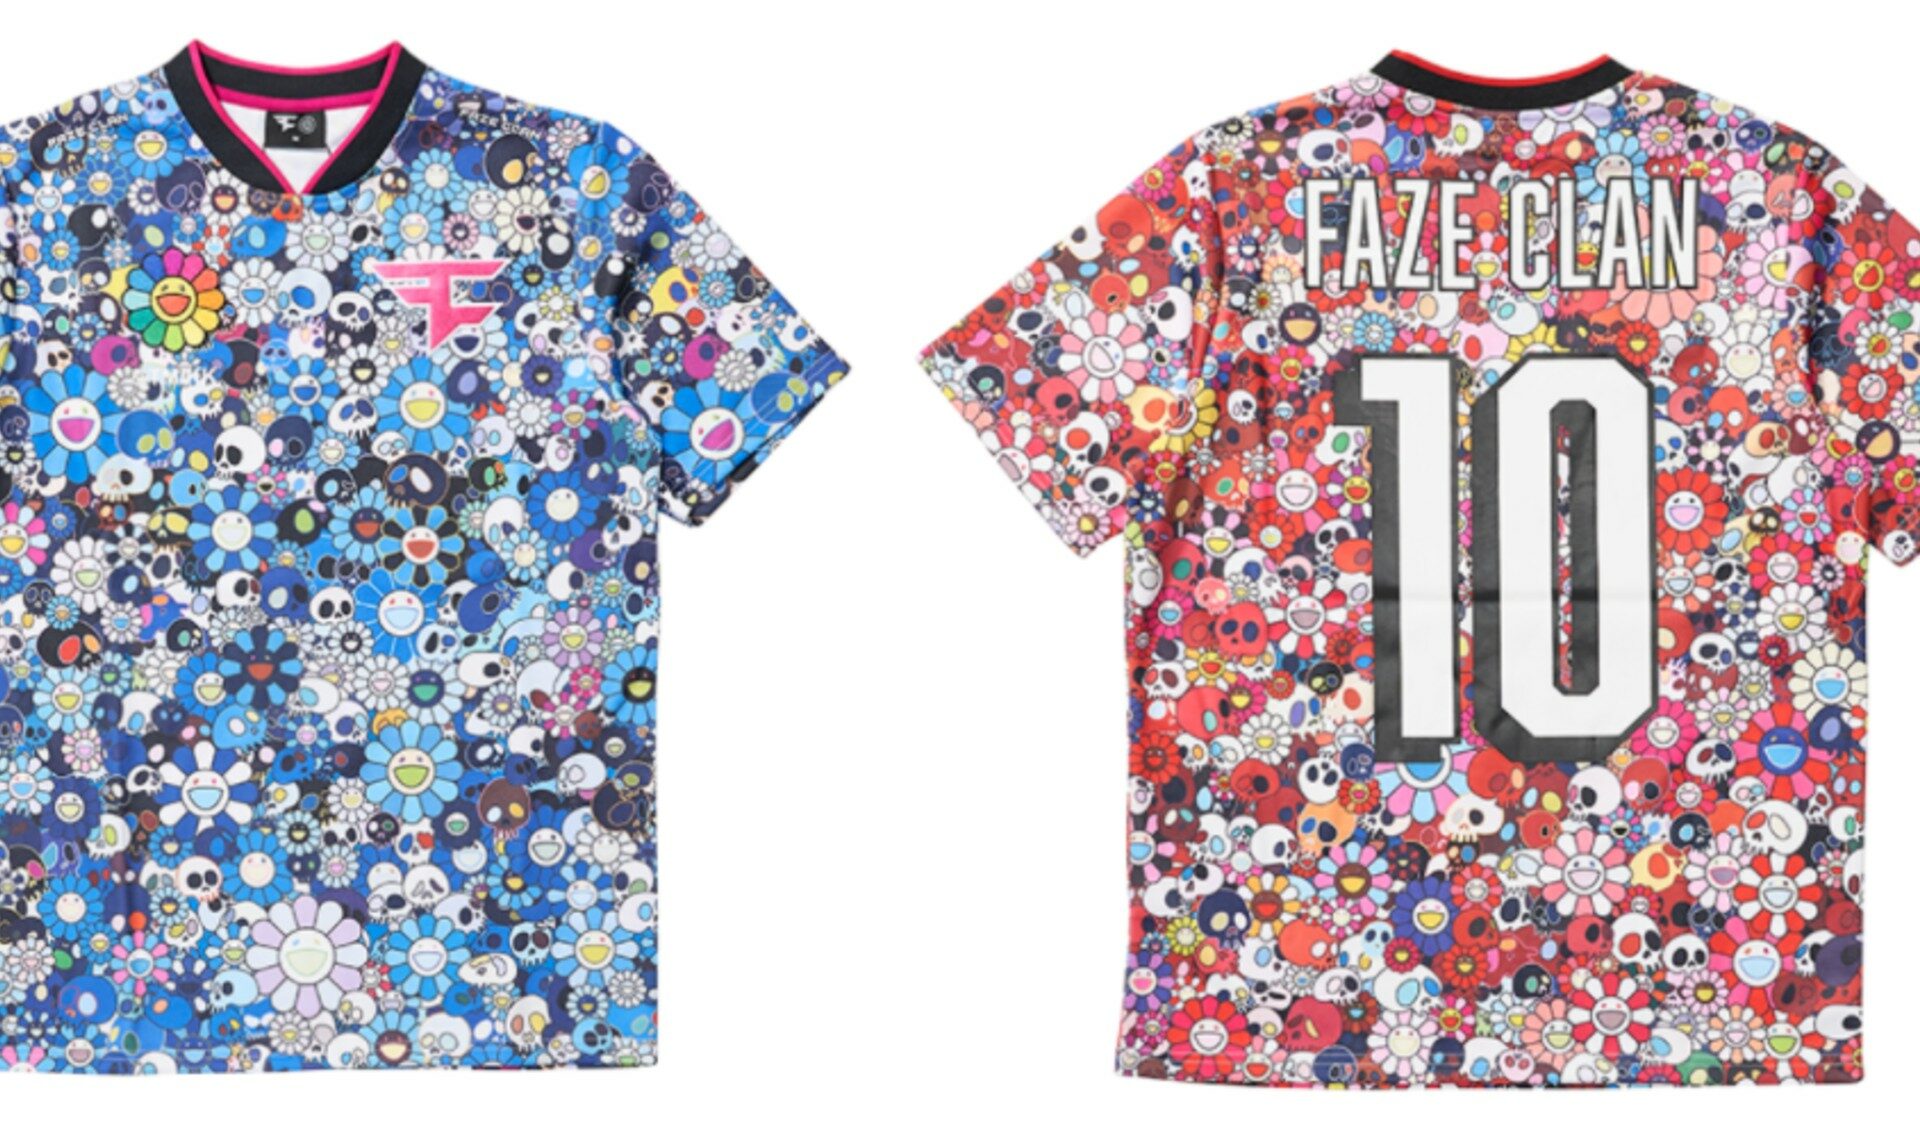 FaZe Clan Collaborates With Illustrious Artist Takashi Murakami On Limited-Edition Merch